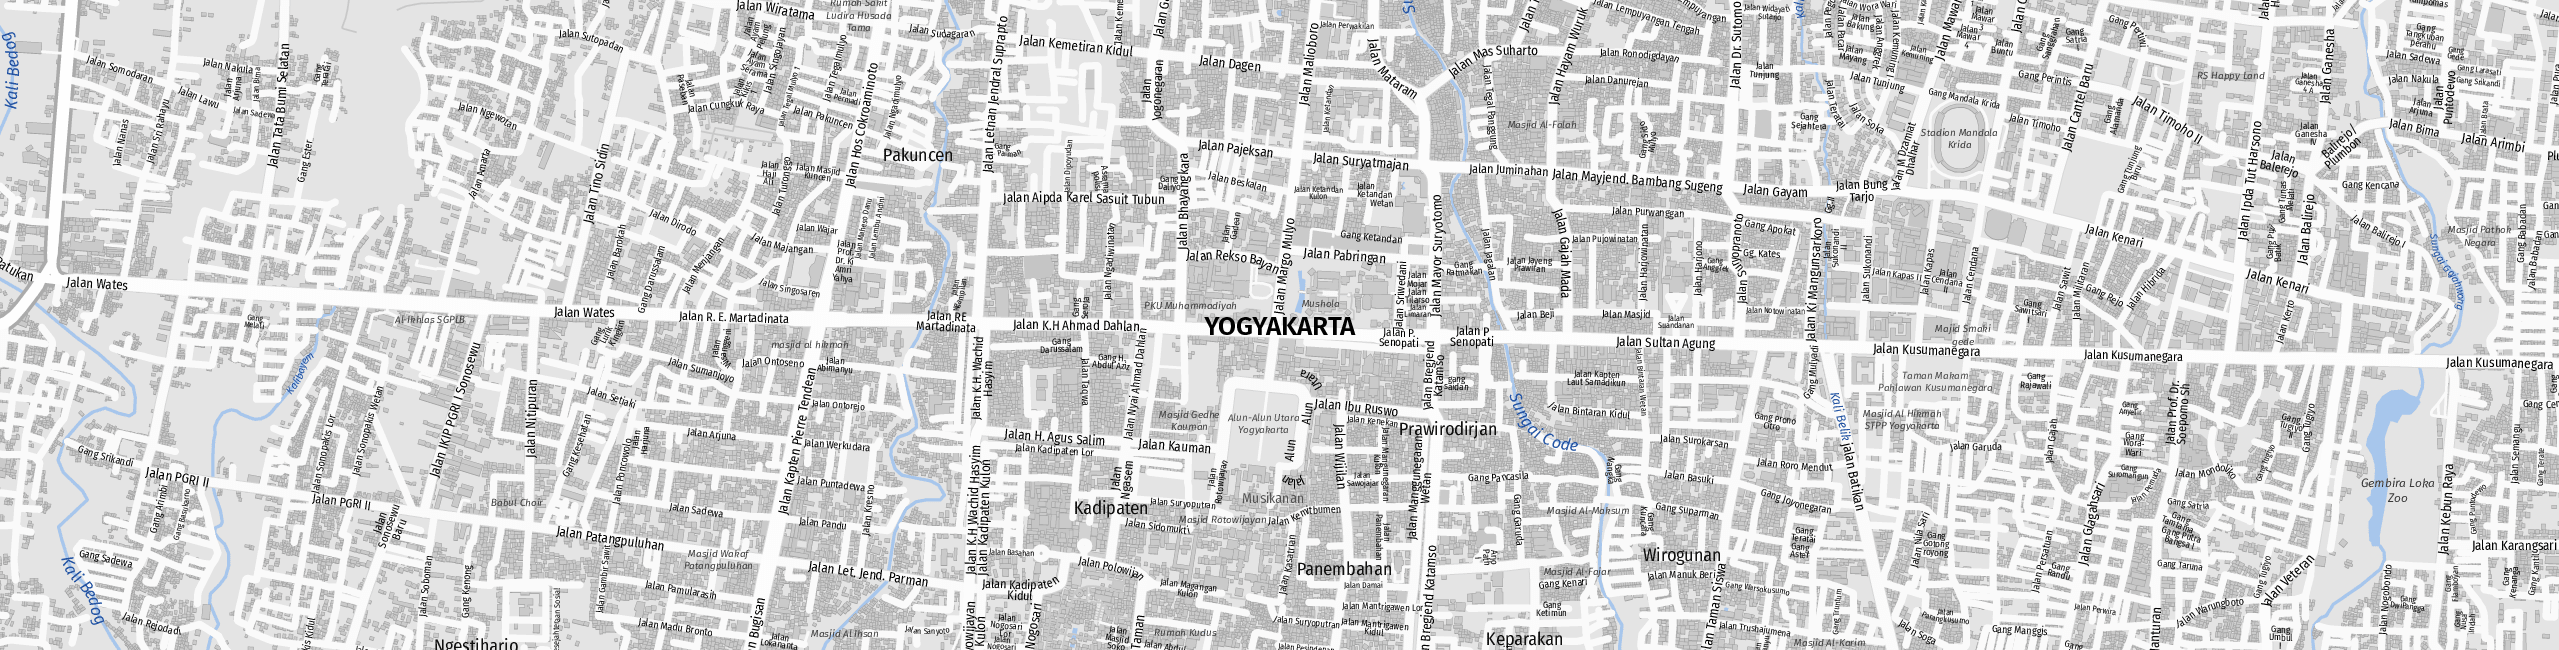 Stadtplan Yogyakarta zum Downloaden.